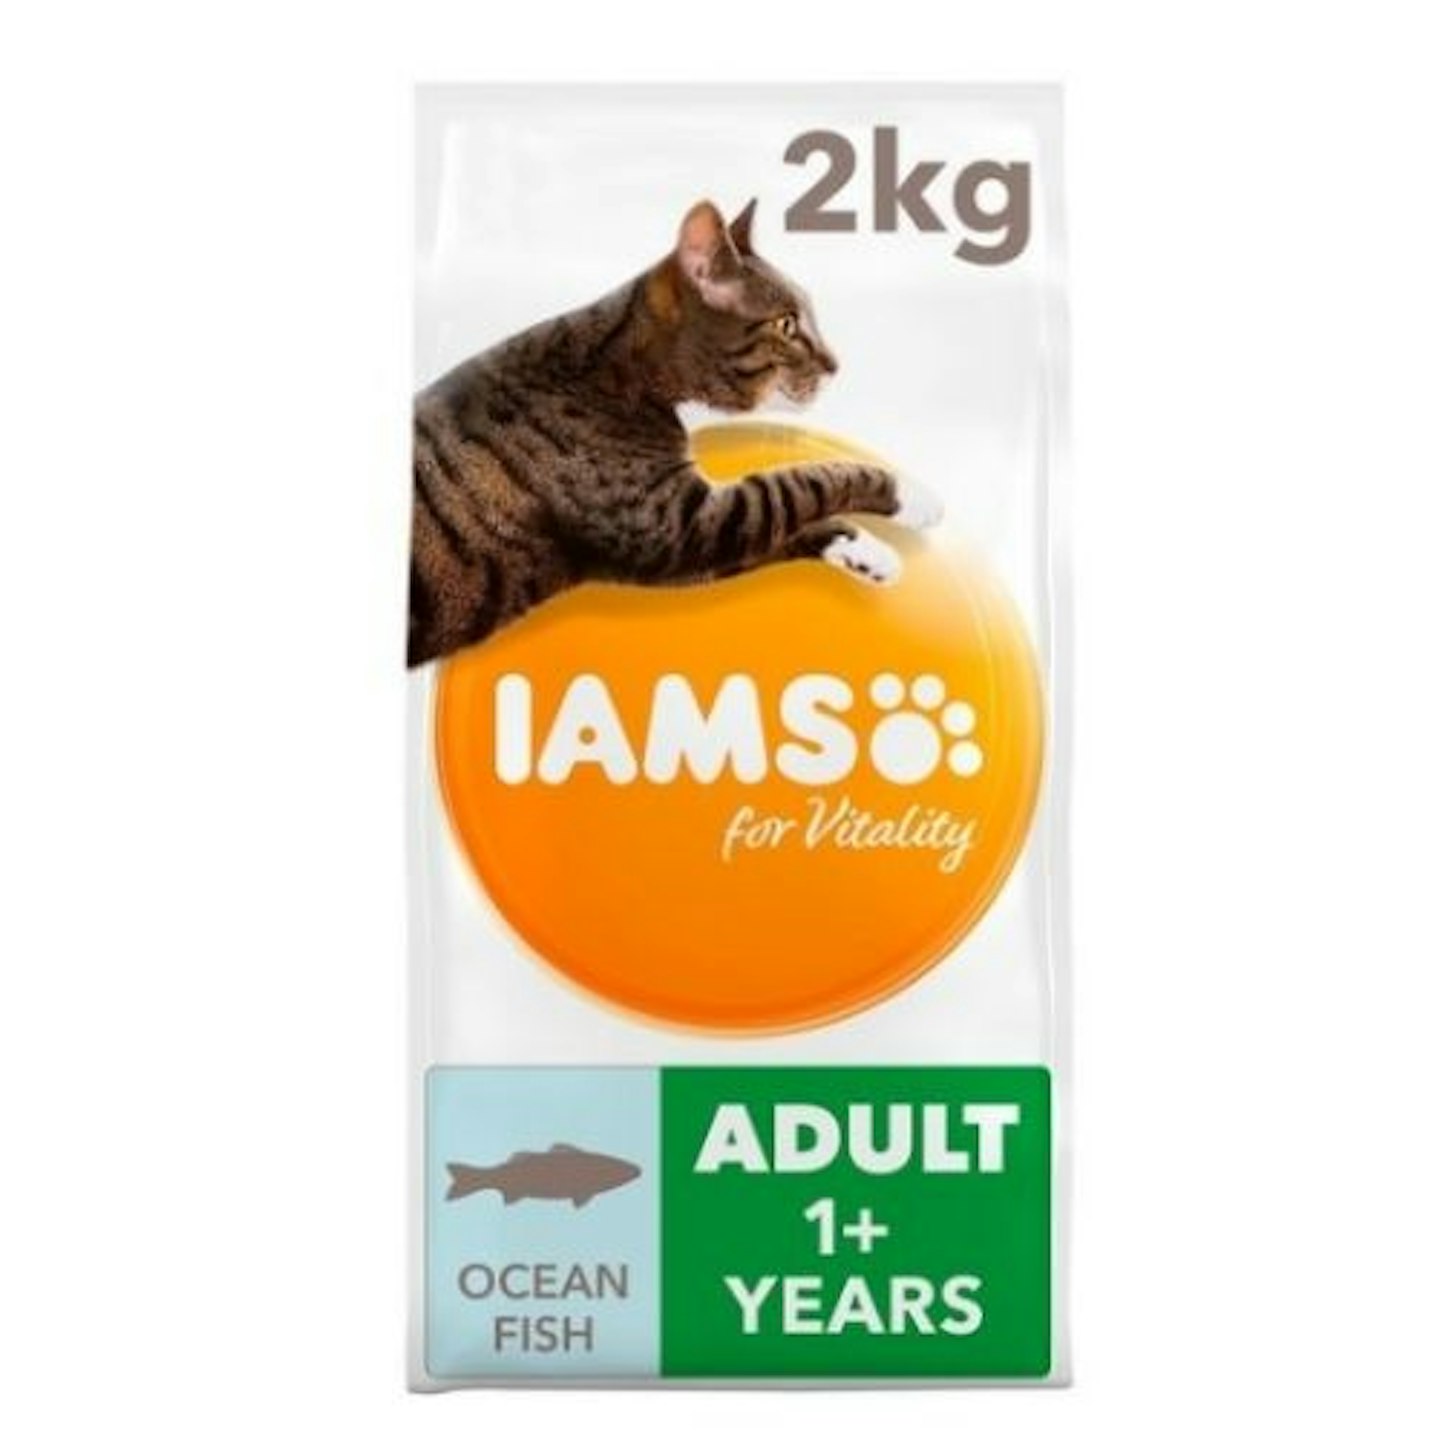 Iams for Vitality 1+ Adult cat food bag